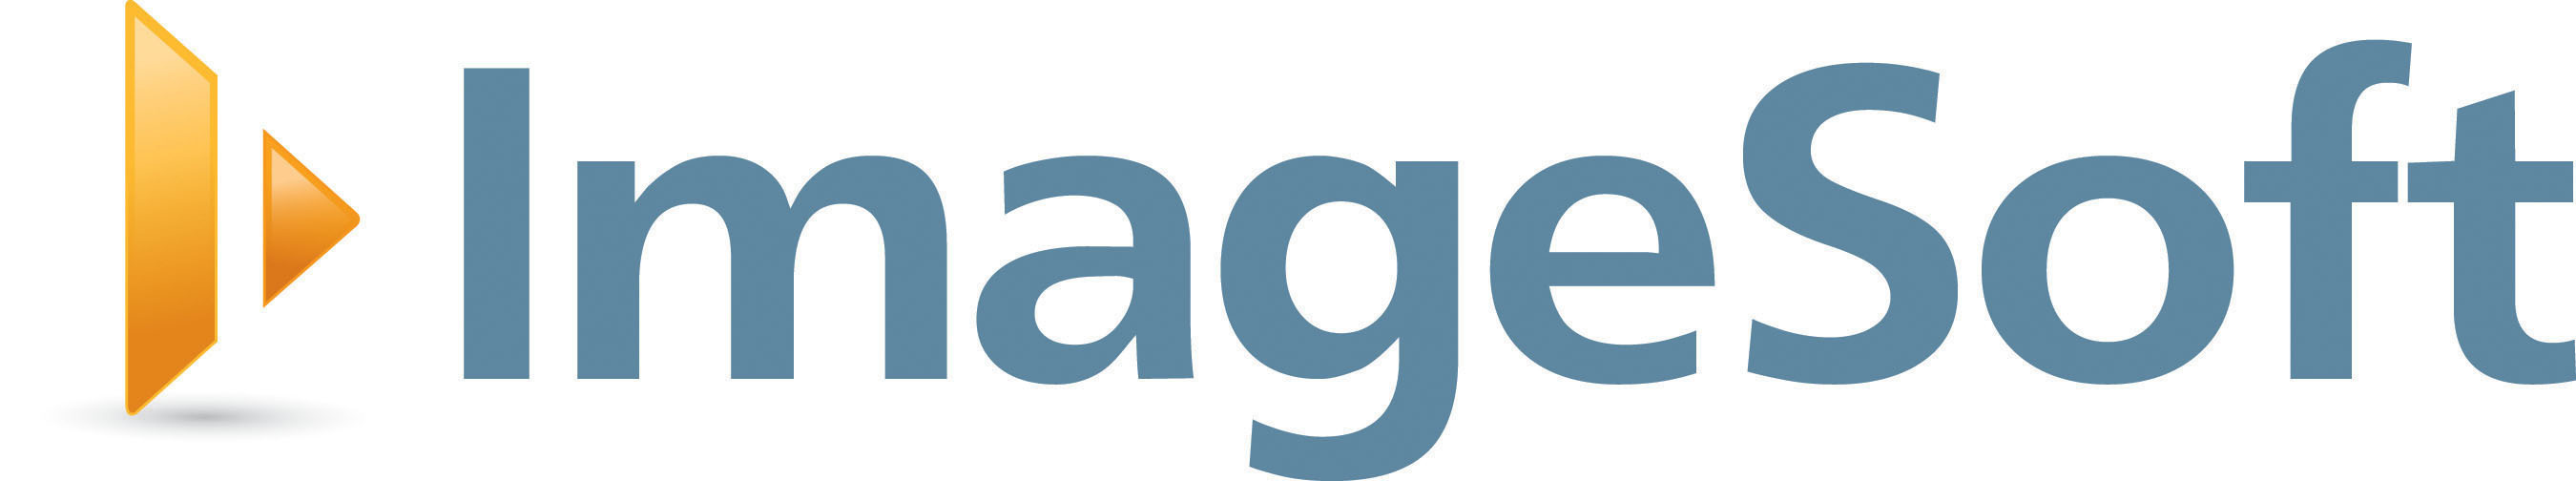 ImageSoft, Inc. Logo. (PRNewsFoto/ImageSoft, Inc.) (PRNewsFoto/)